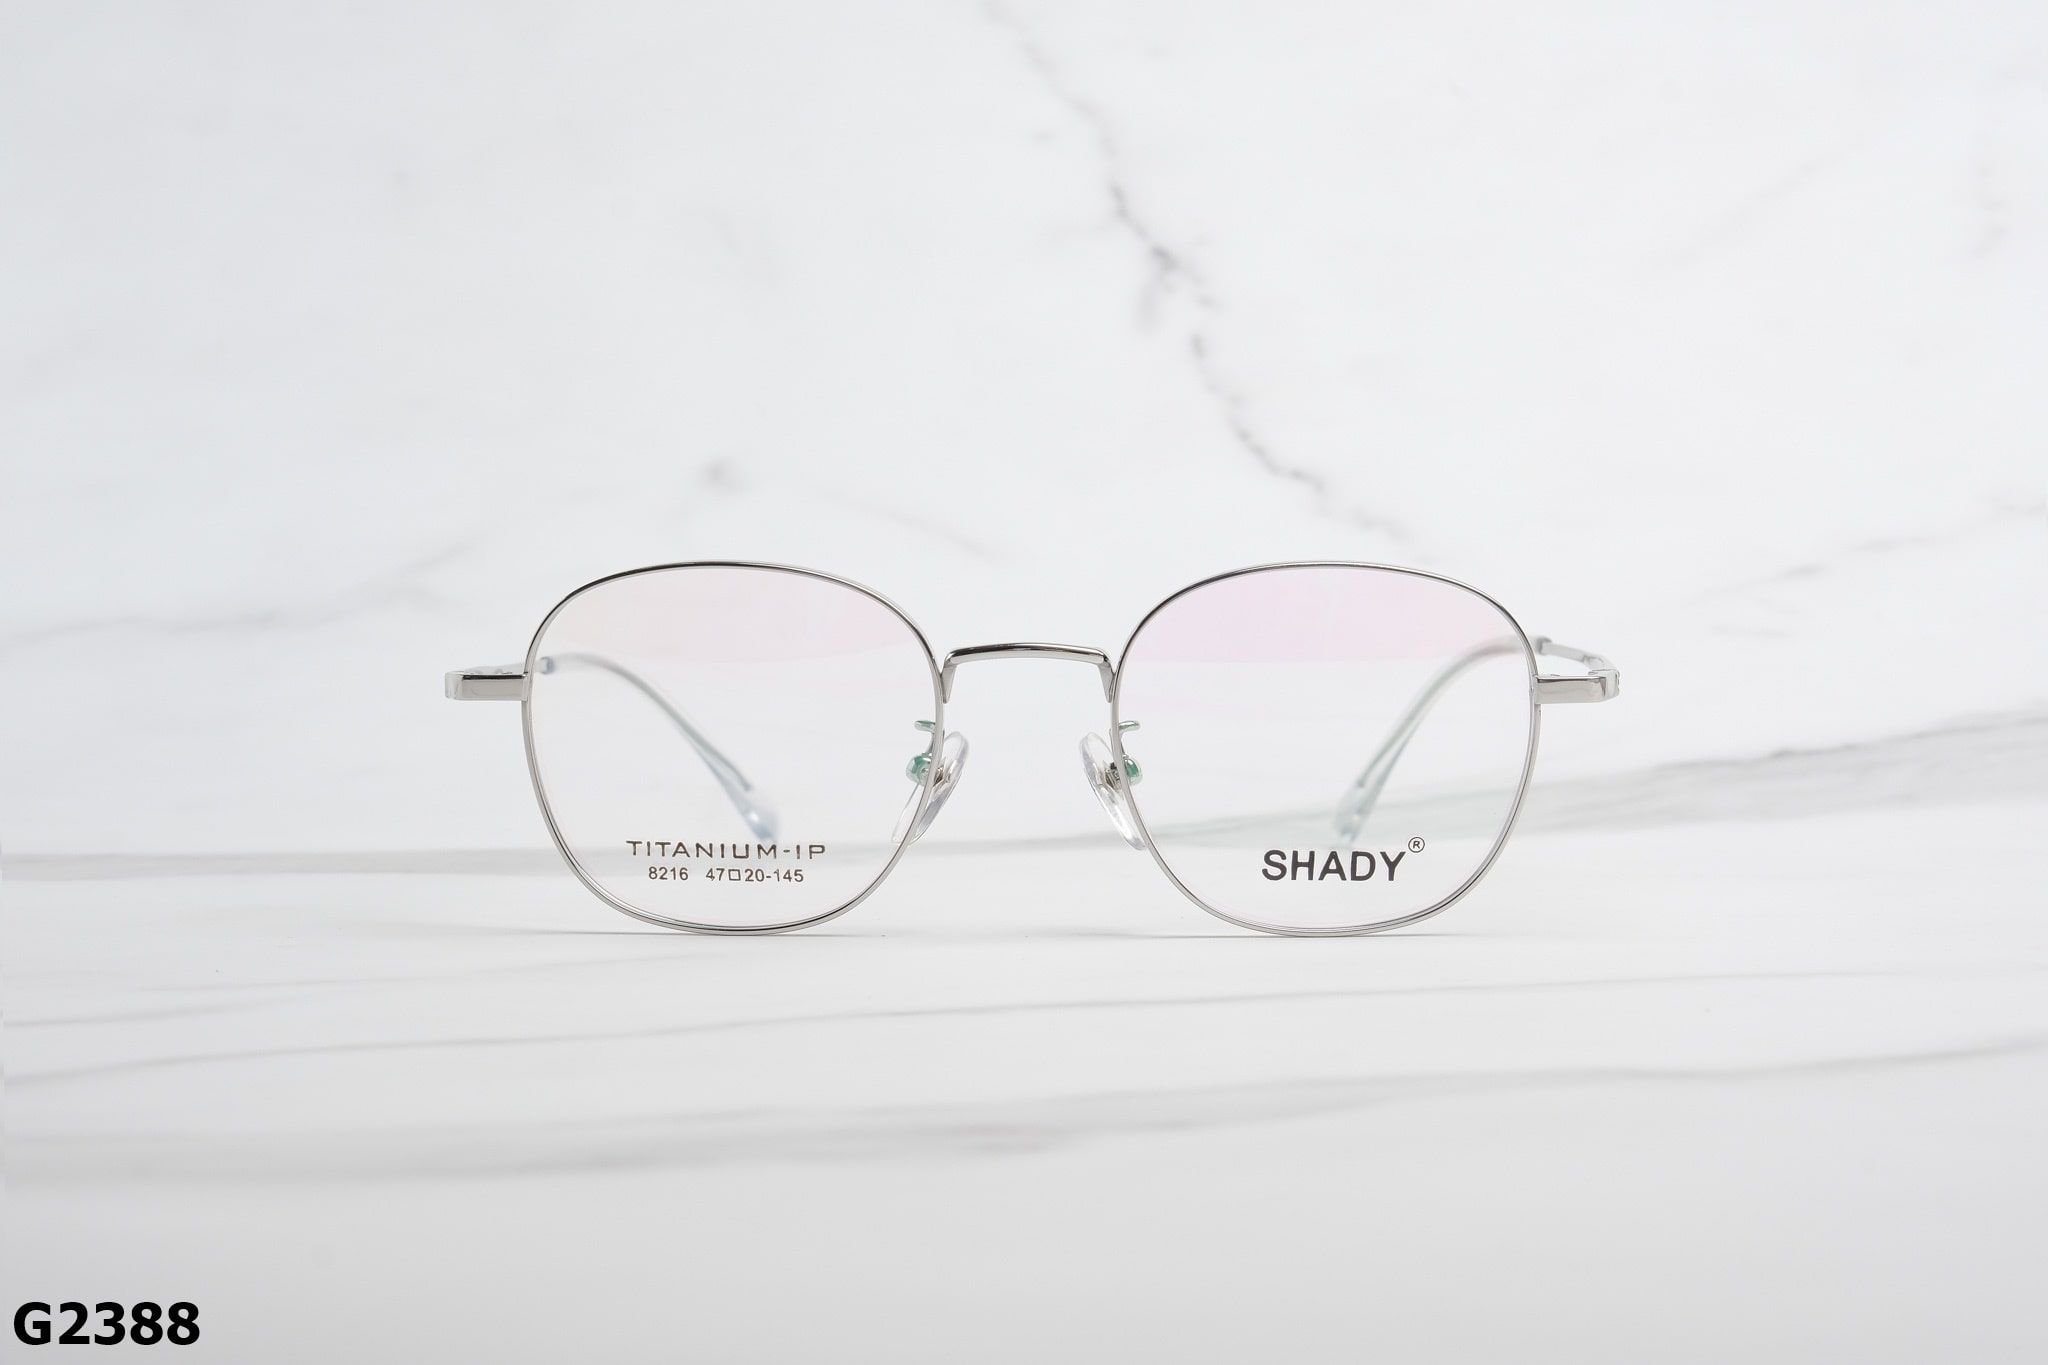  SHADY Eyewear - Glasses - G2388 